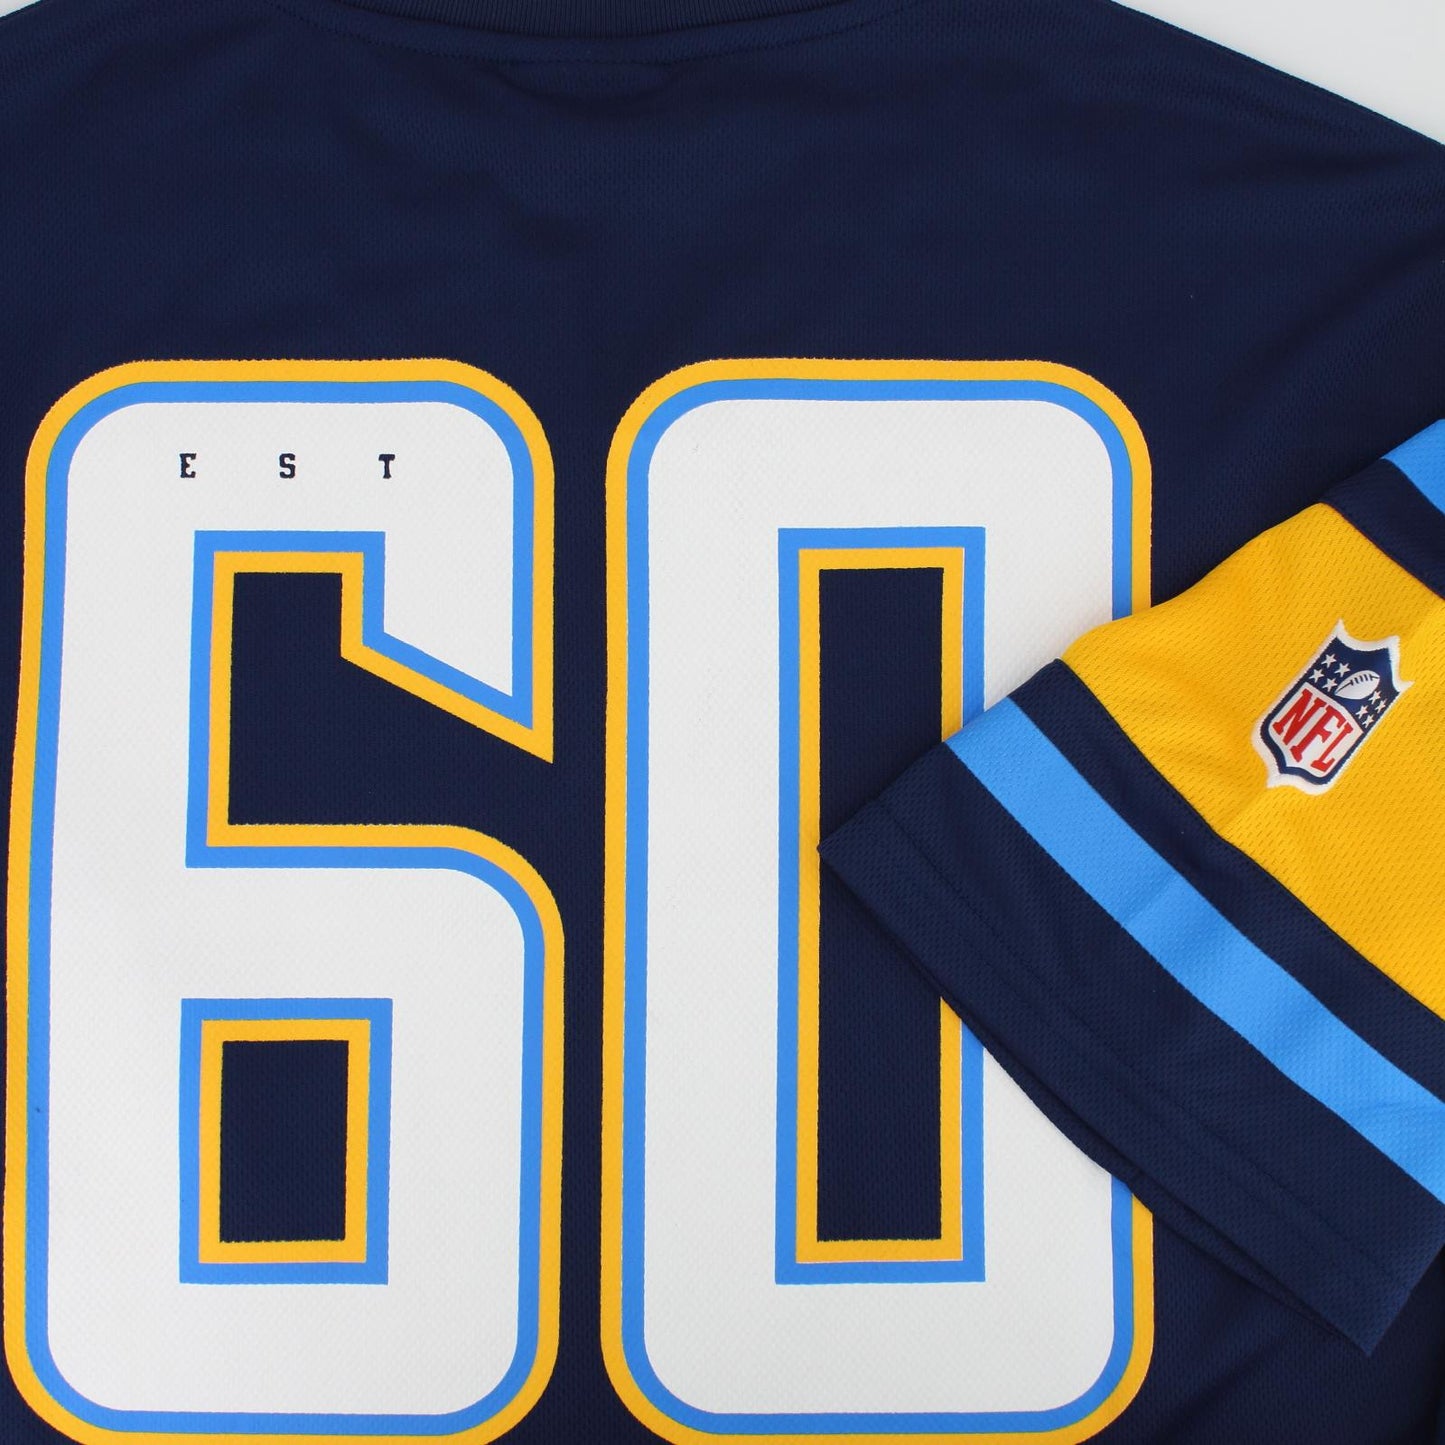 Fanatics NFL Football LA Los Angeles Chargers Herren T-Shirt Nr 60 Trikot blau